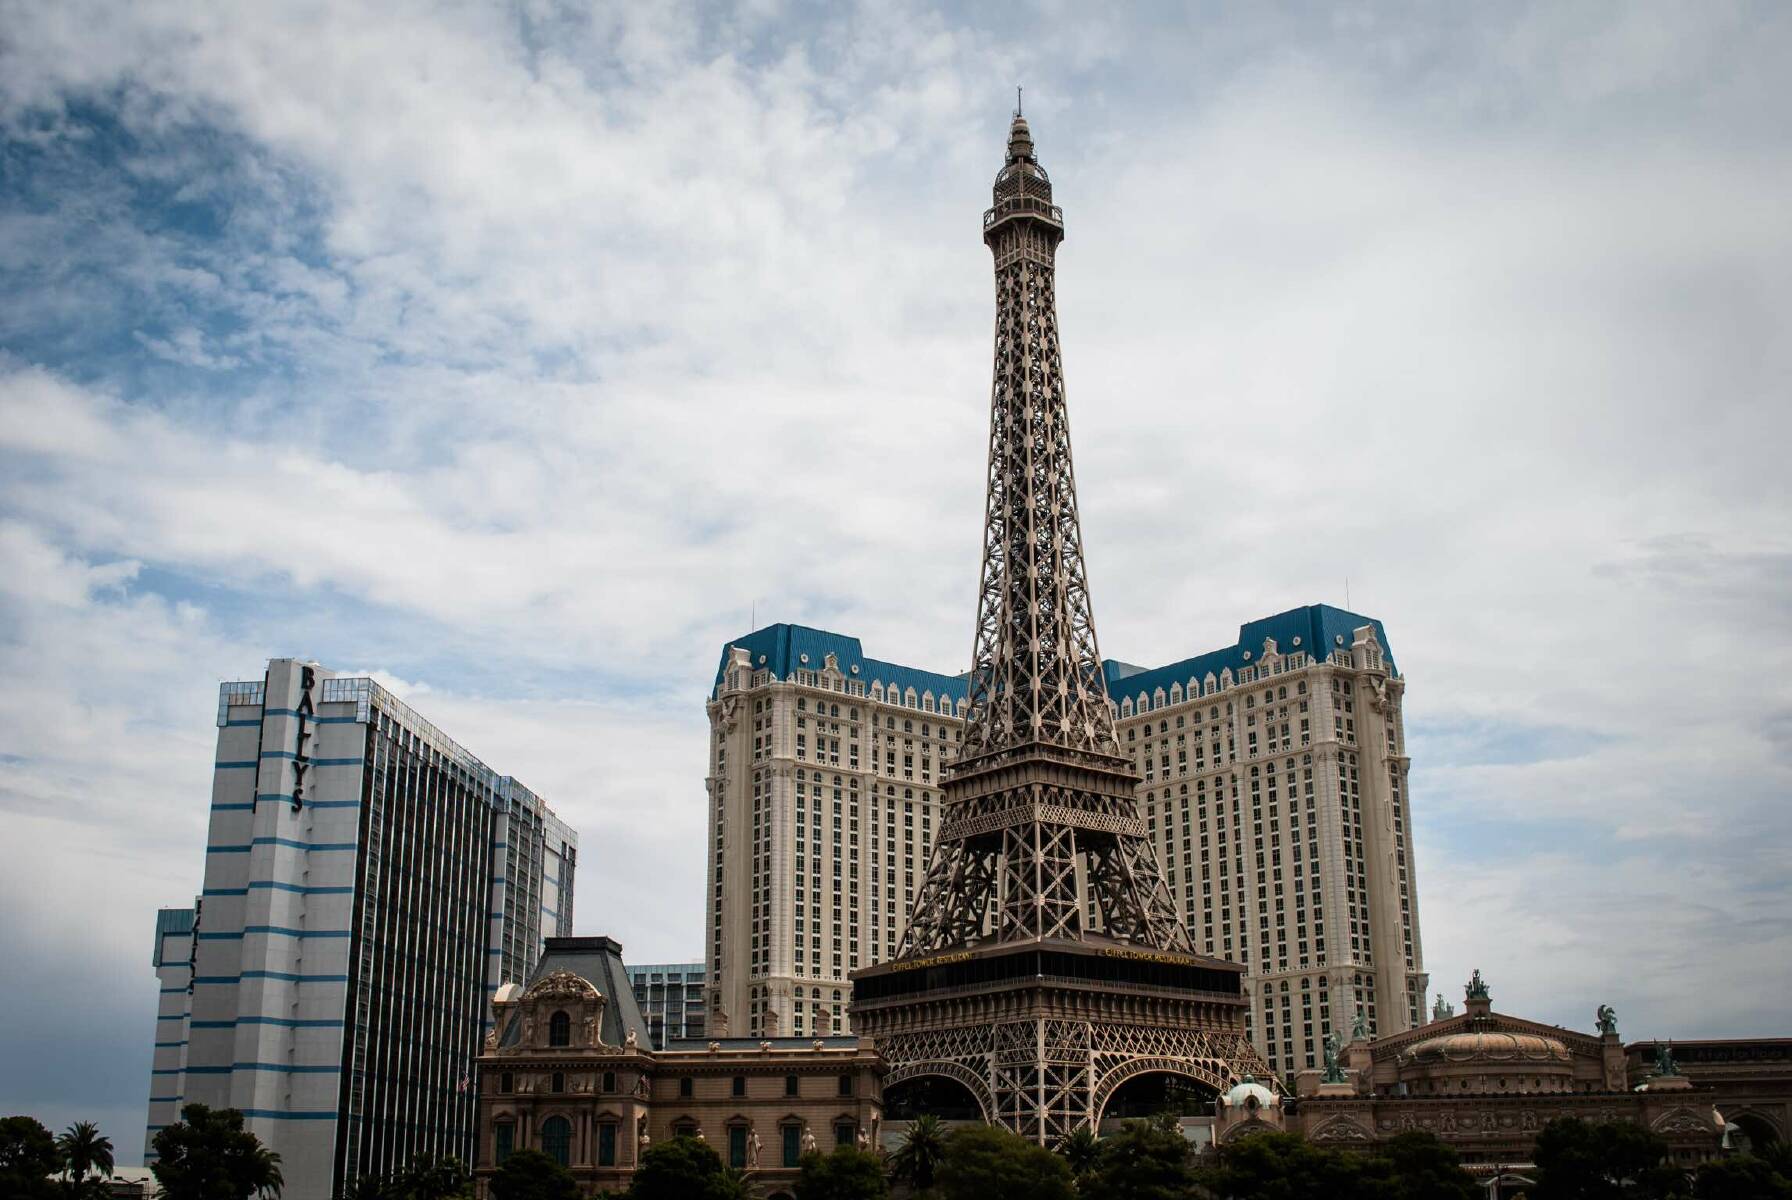 Eiffel Tower Las Vegas: Make a reservation for Brunch, Lunch or Dinner